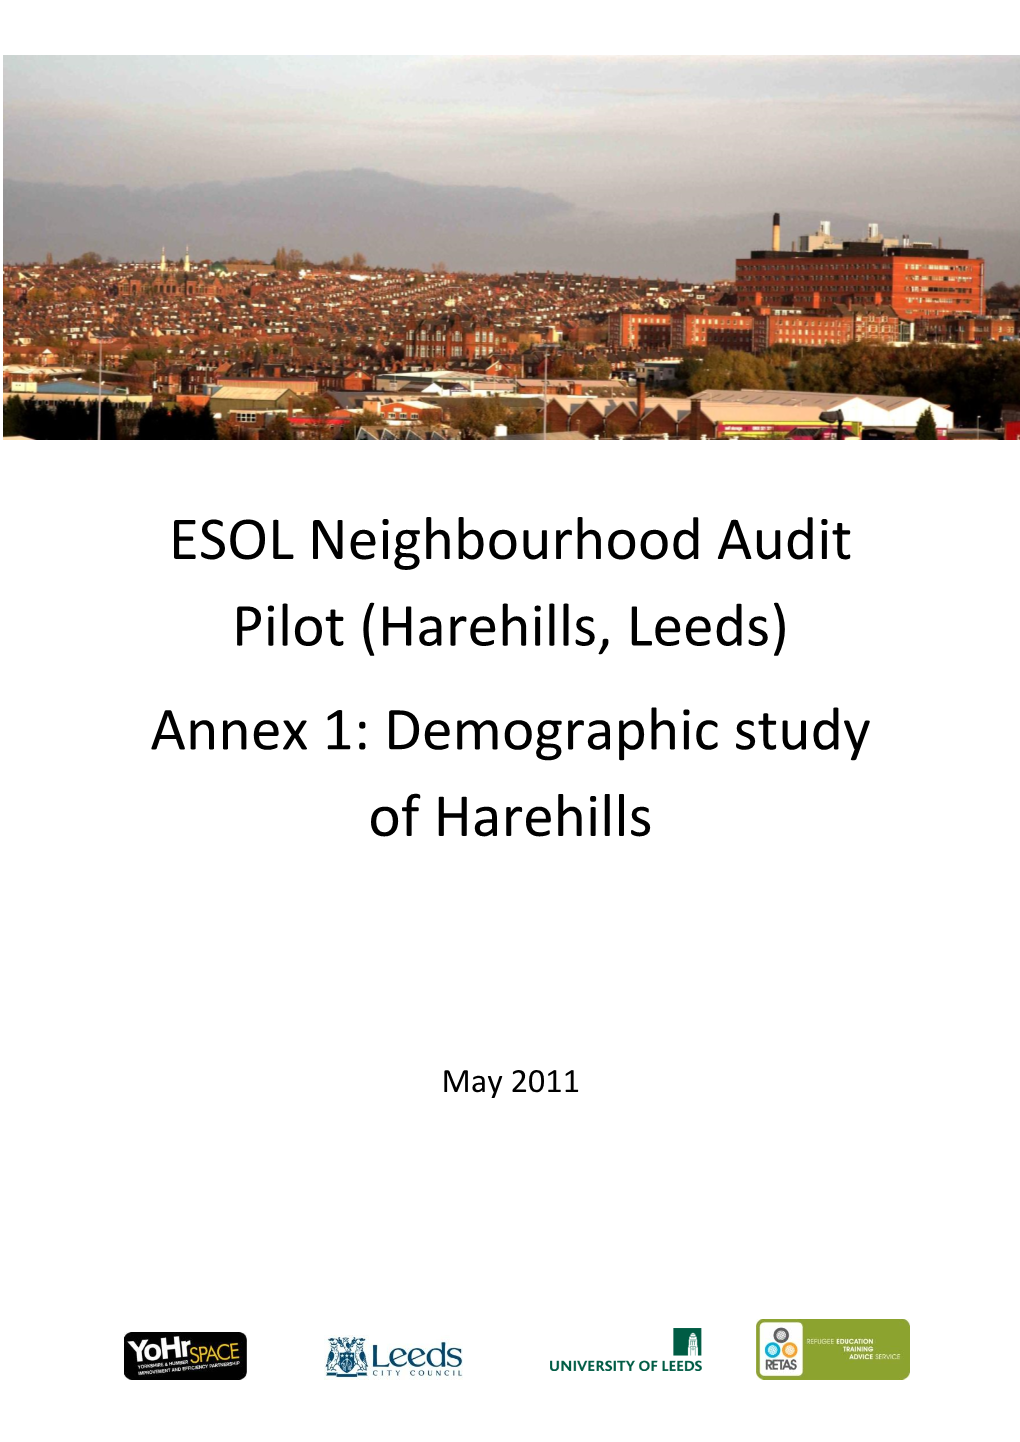 Annex 1: Demographic Study of Harehills